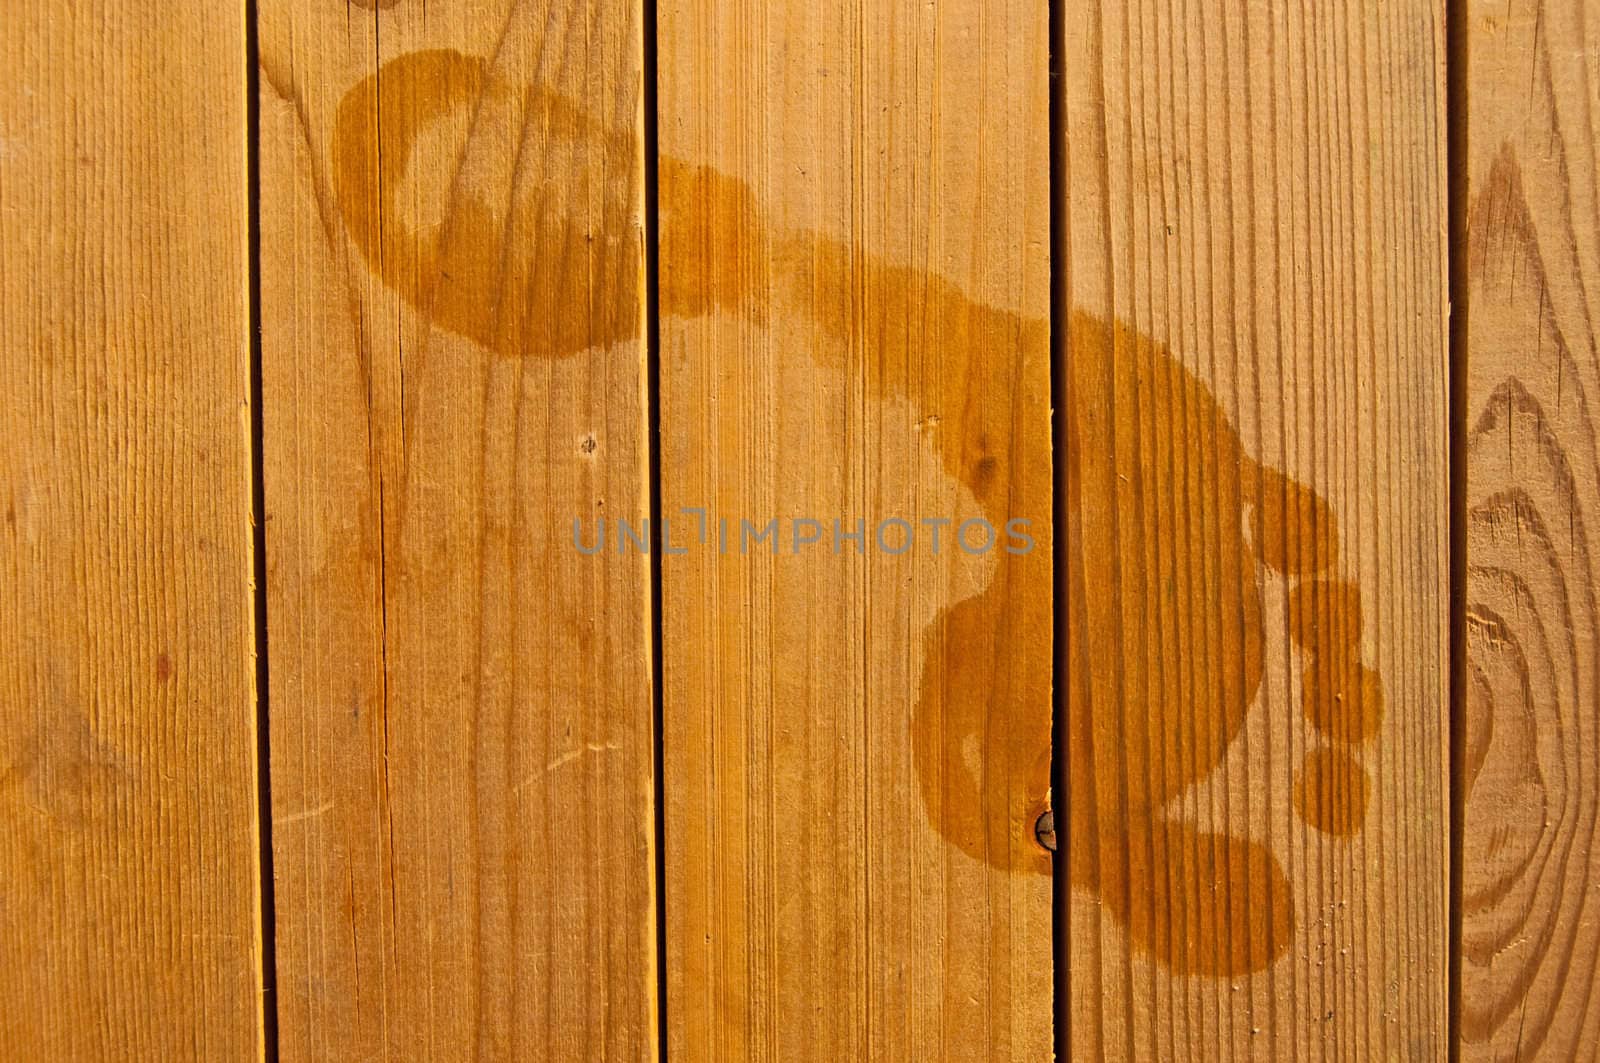 Wet footprints on wooden planks.